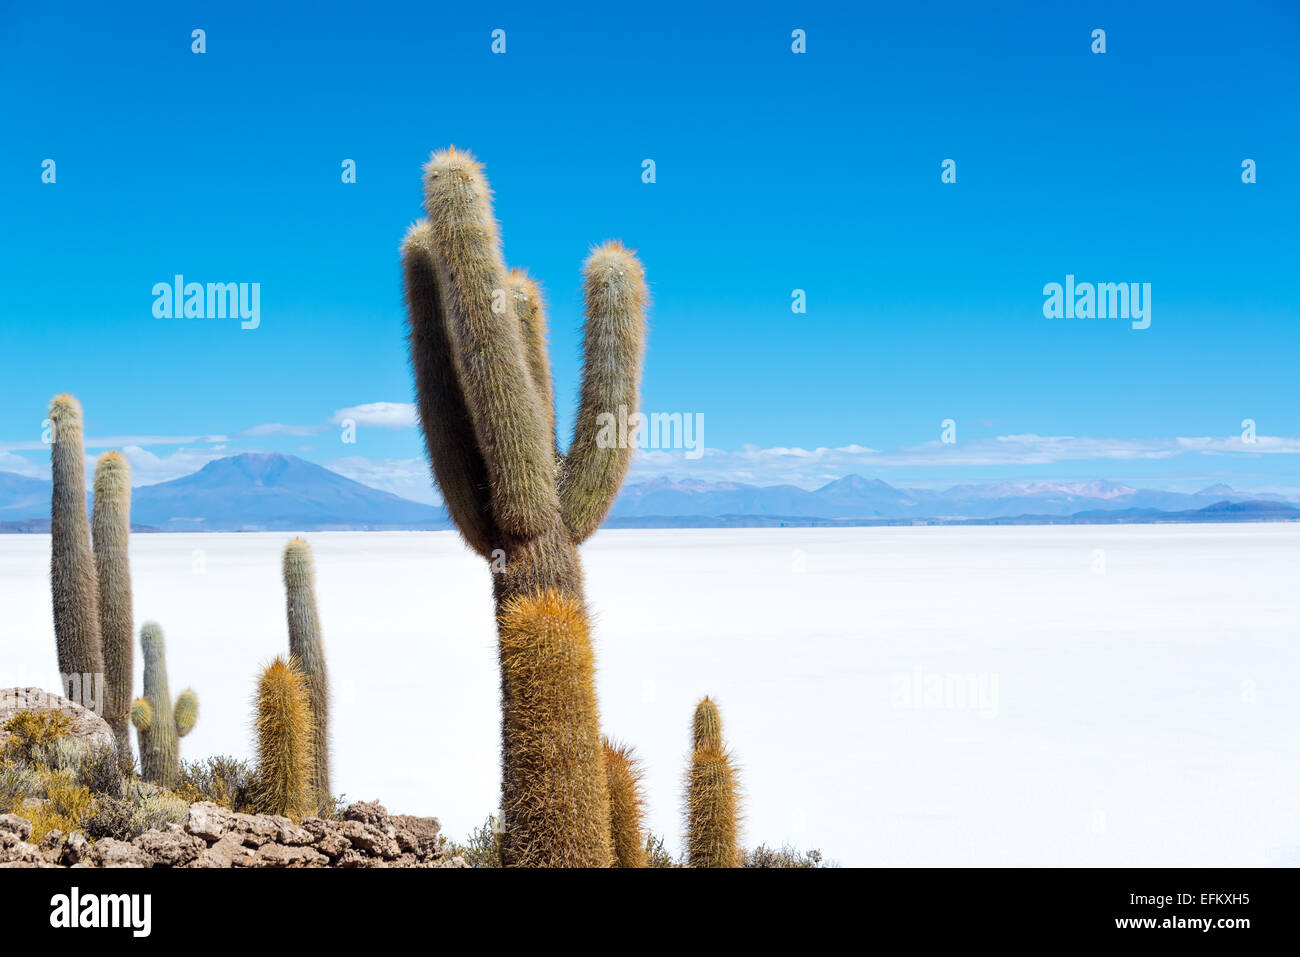 Cactus on Island Incahuasi with the Uyuni Salt Flats visible below in Bolivia Stock Photo